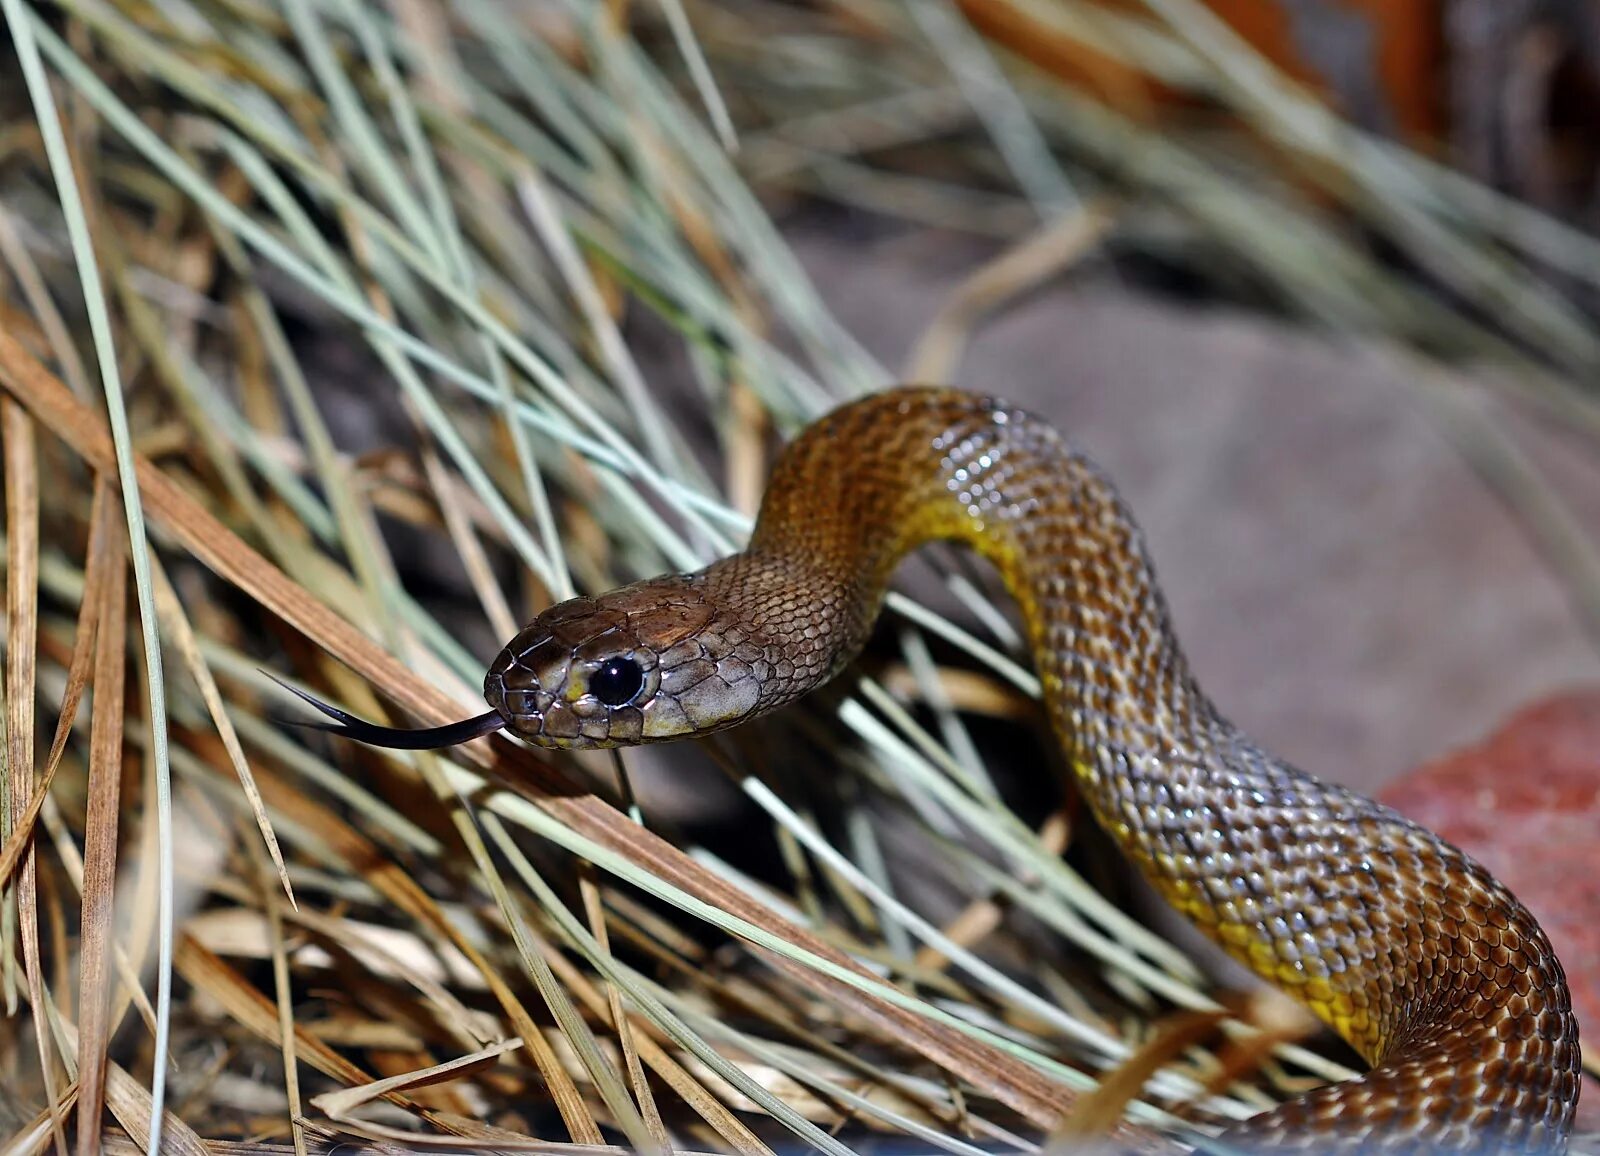 Snakes are dangerous. Тайпан (Oxyuranus scutellatus). Тайпан Маккоя змея. Ядовитая змея Тайпан. Тайпан змея Австралии.